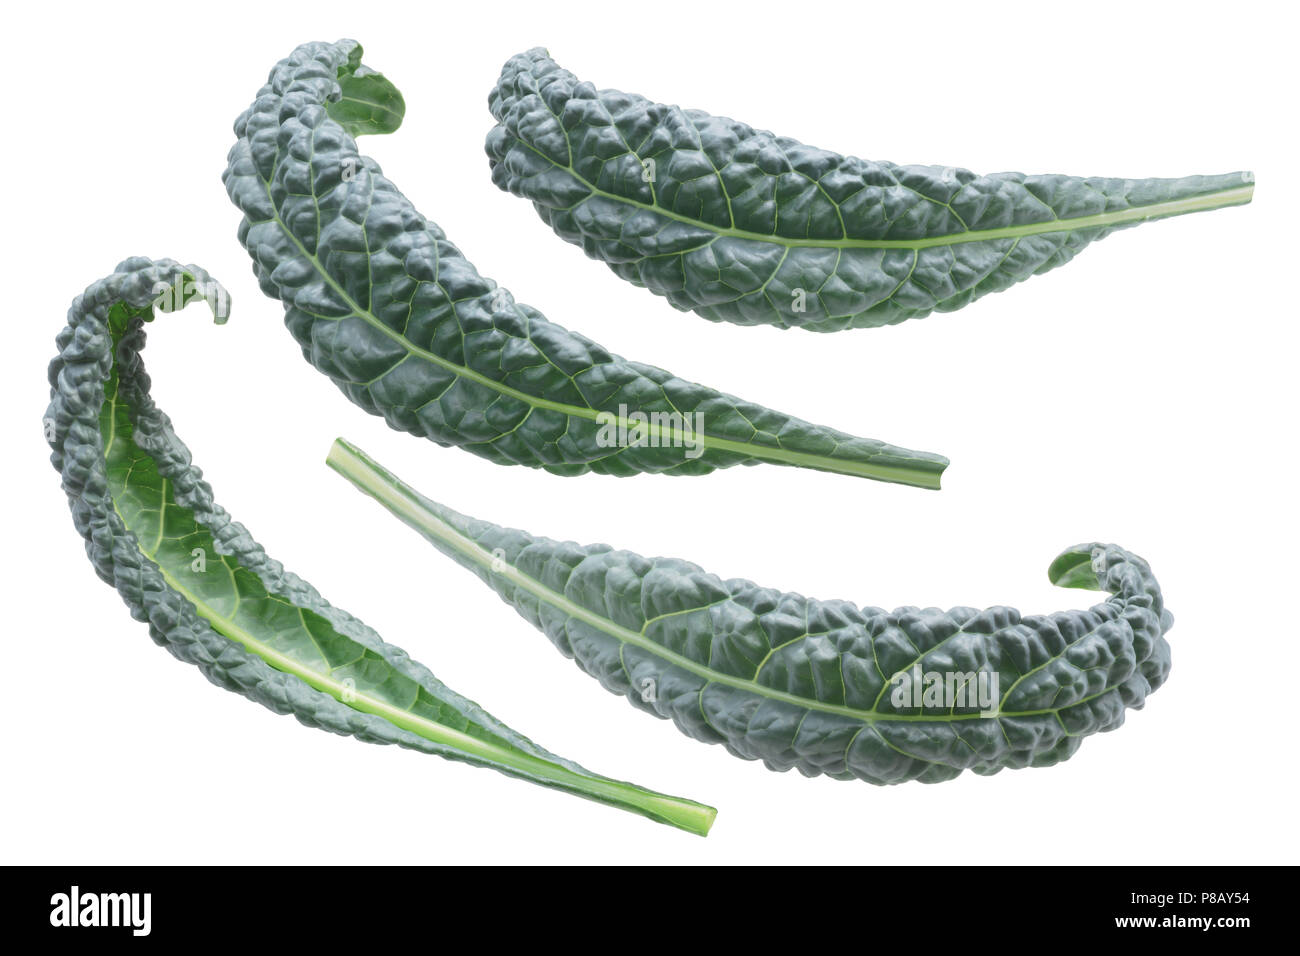 Bumpy leaf Cabbage or Kale, Nero di Toscana (Brassica oleracea) Stock Photo